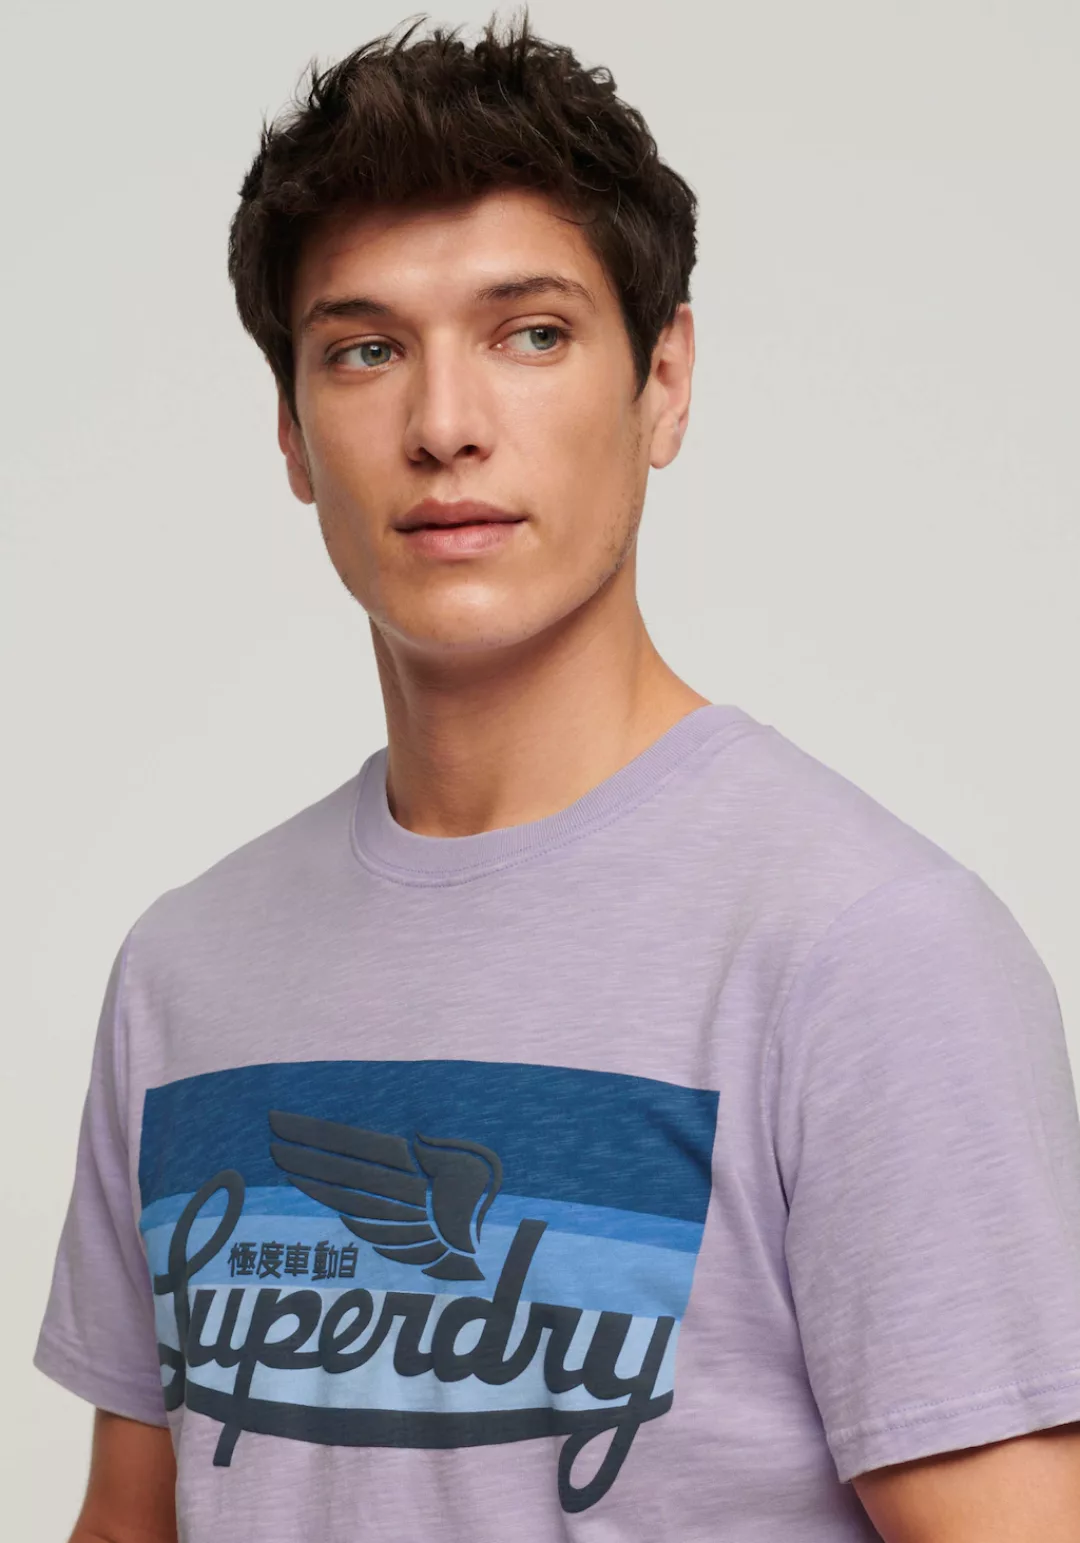 Superdry T-Shirt CALI STRIPED LOGO T SHIRT Light Lavender Purple Slub günstig online kaufen